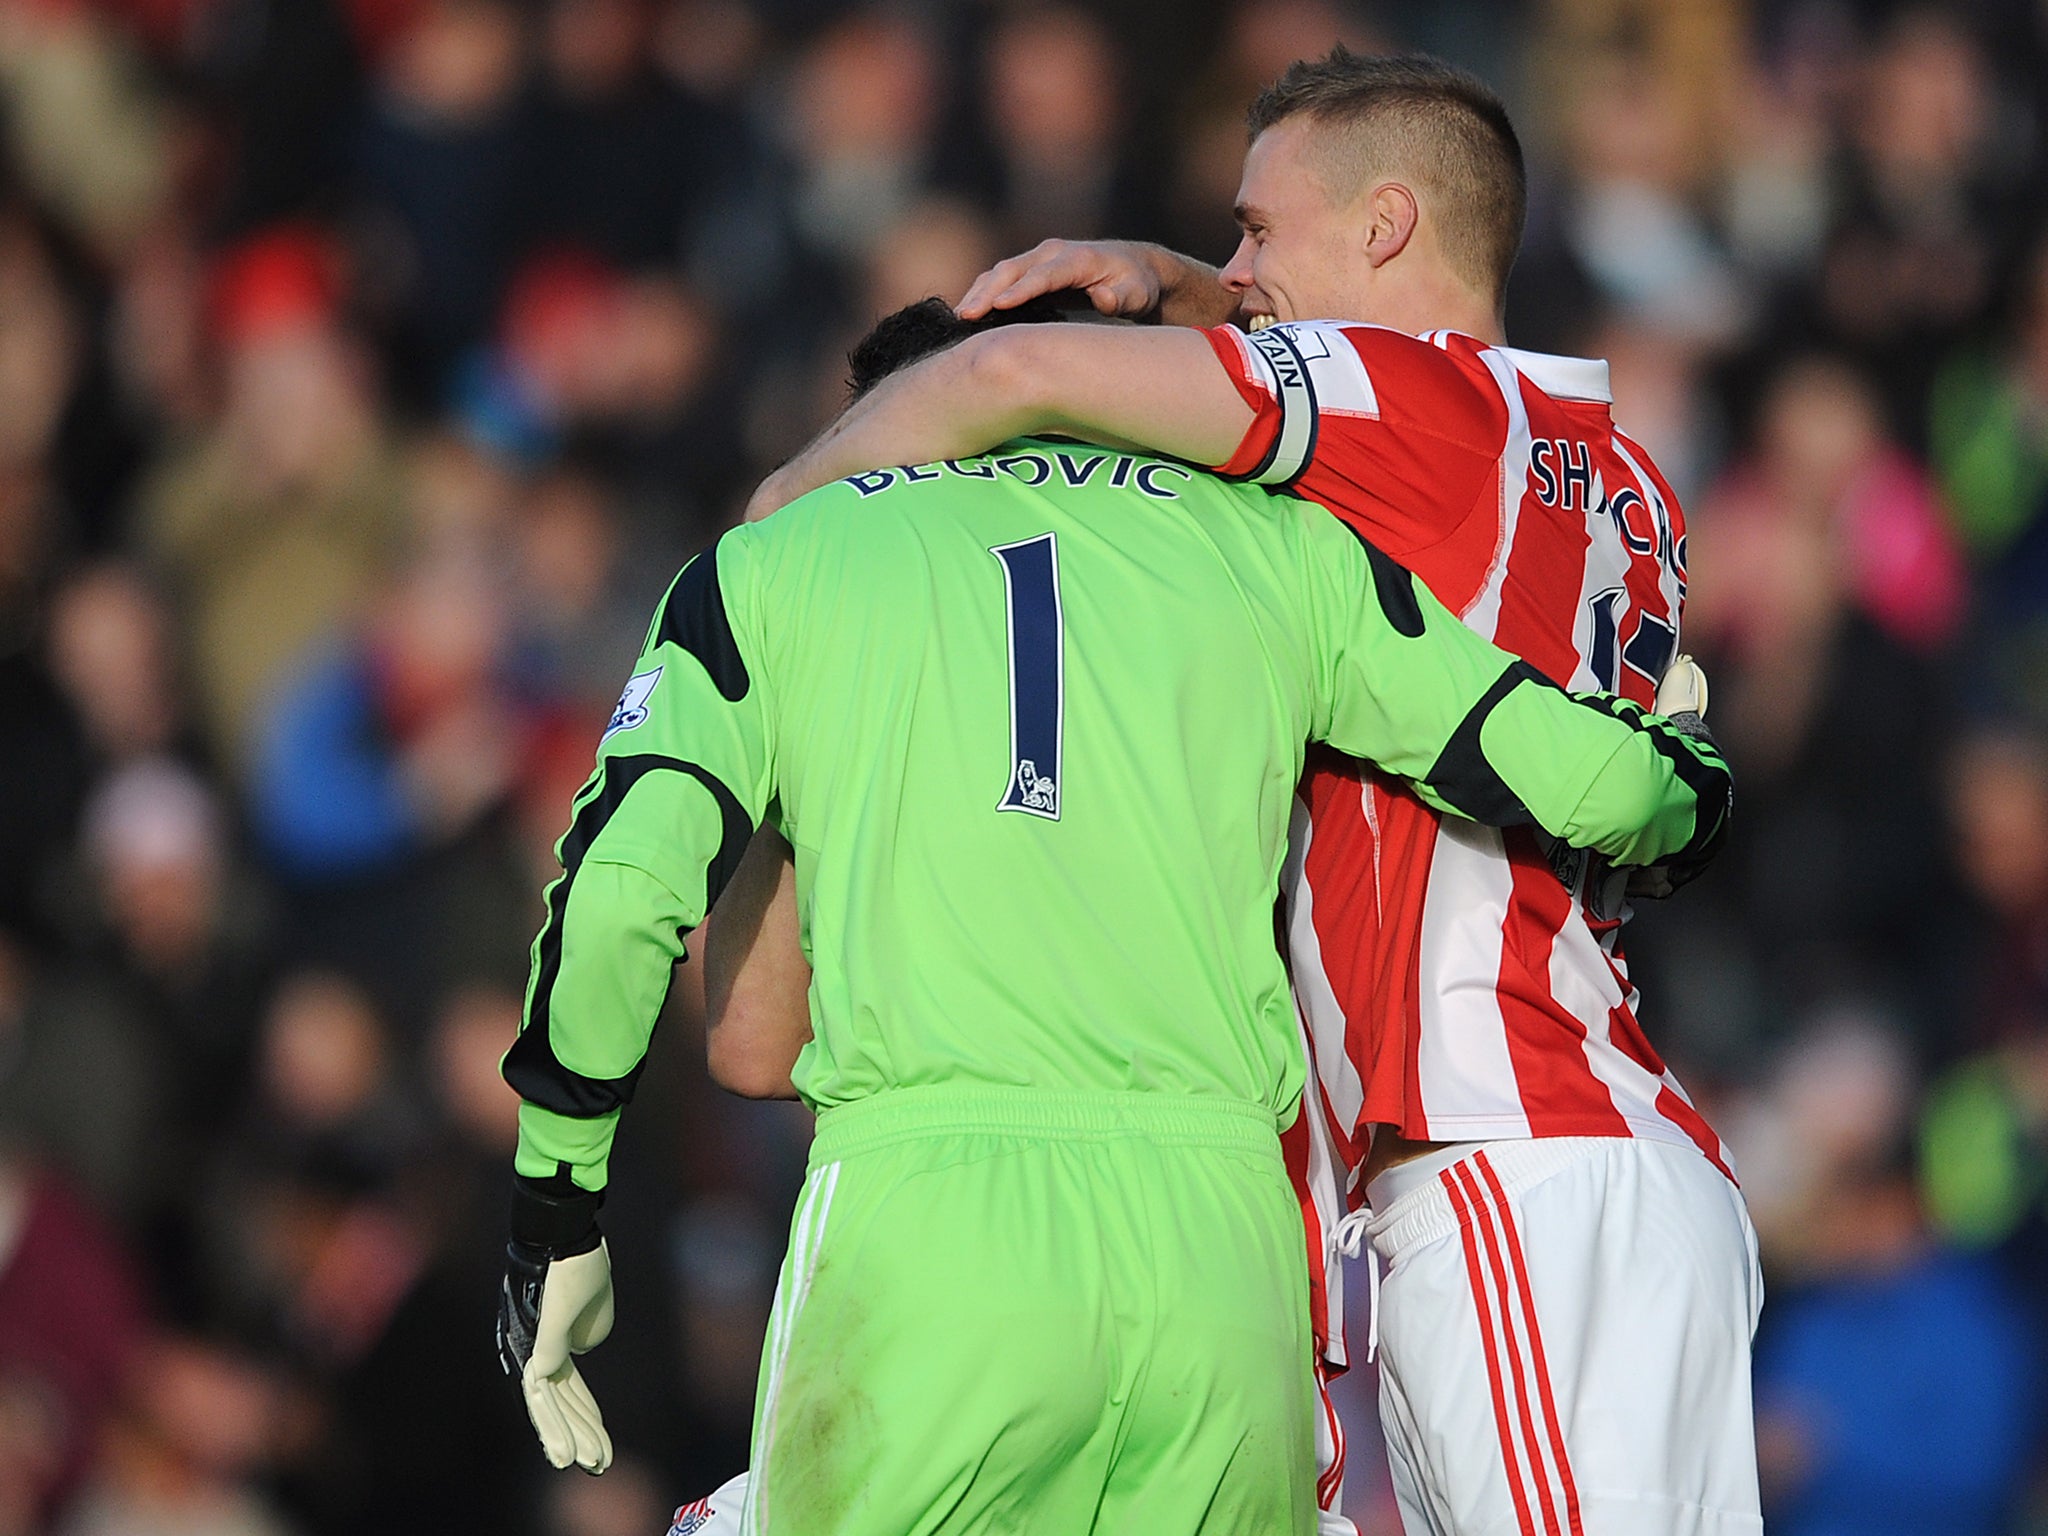 Asmir Begovic scored just 13 seconds into Stoke's Premier League match against Southampton